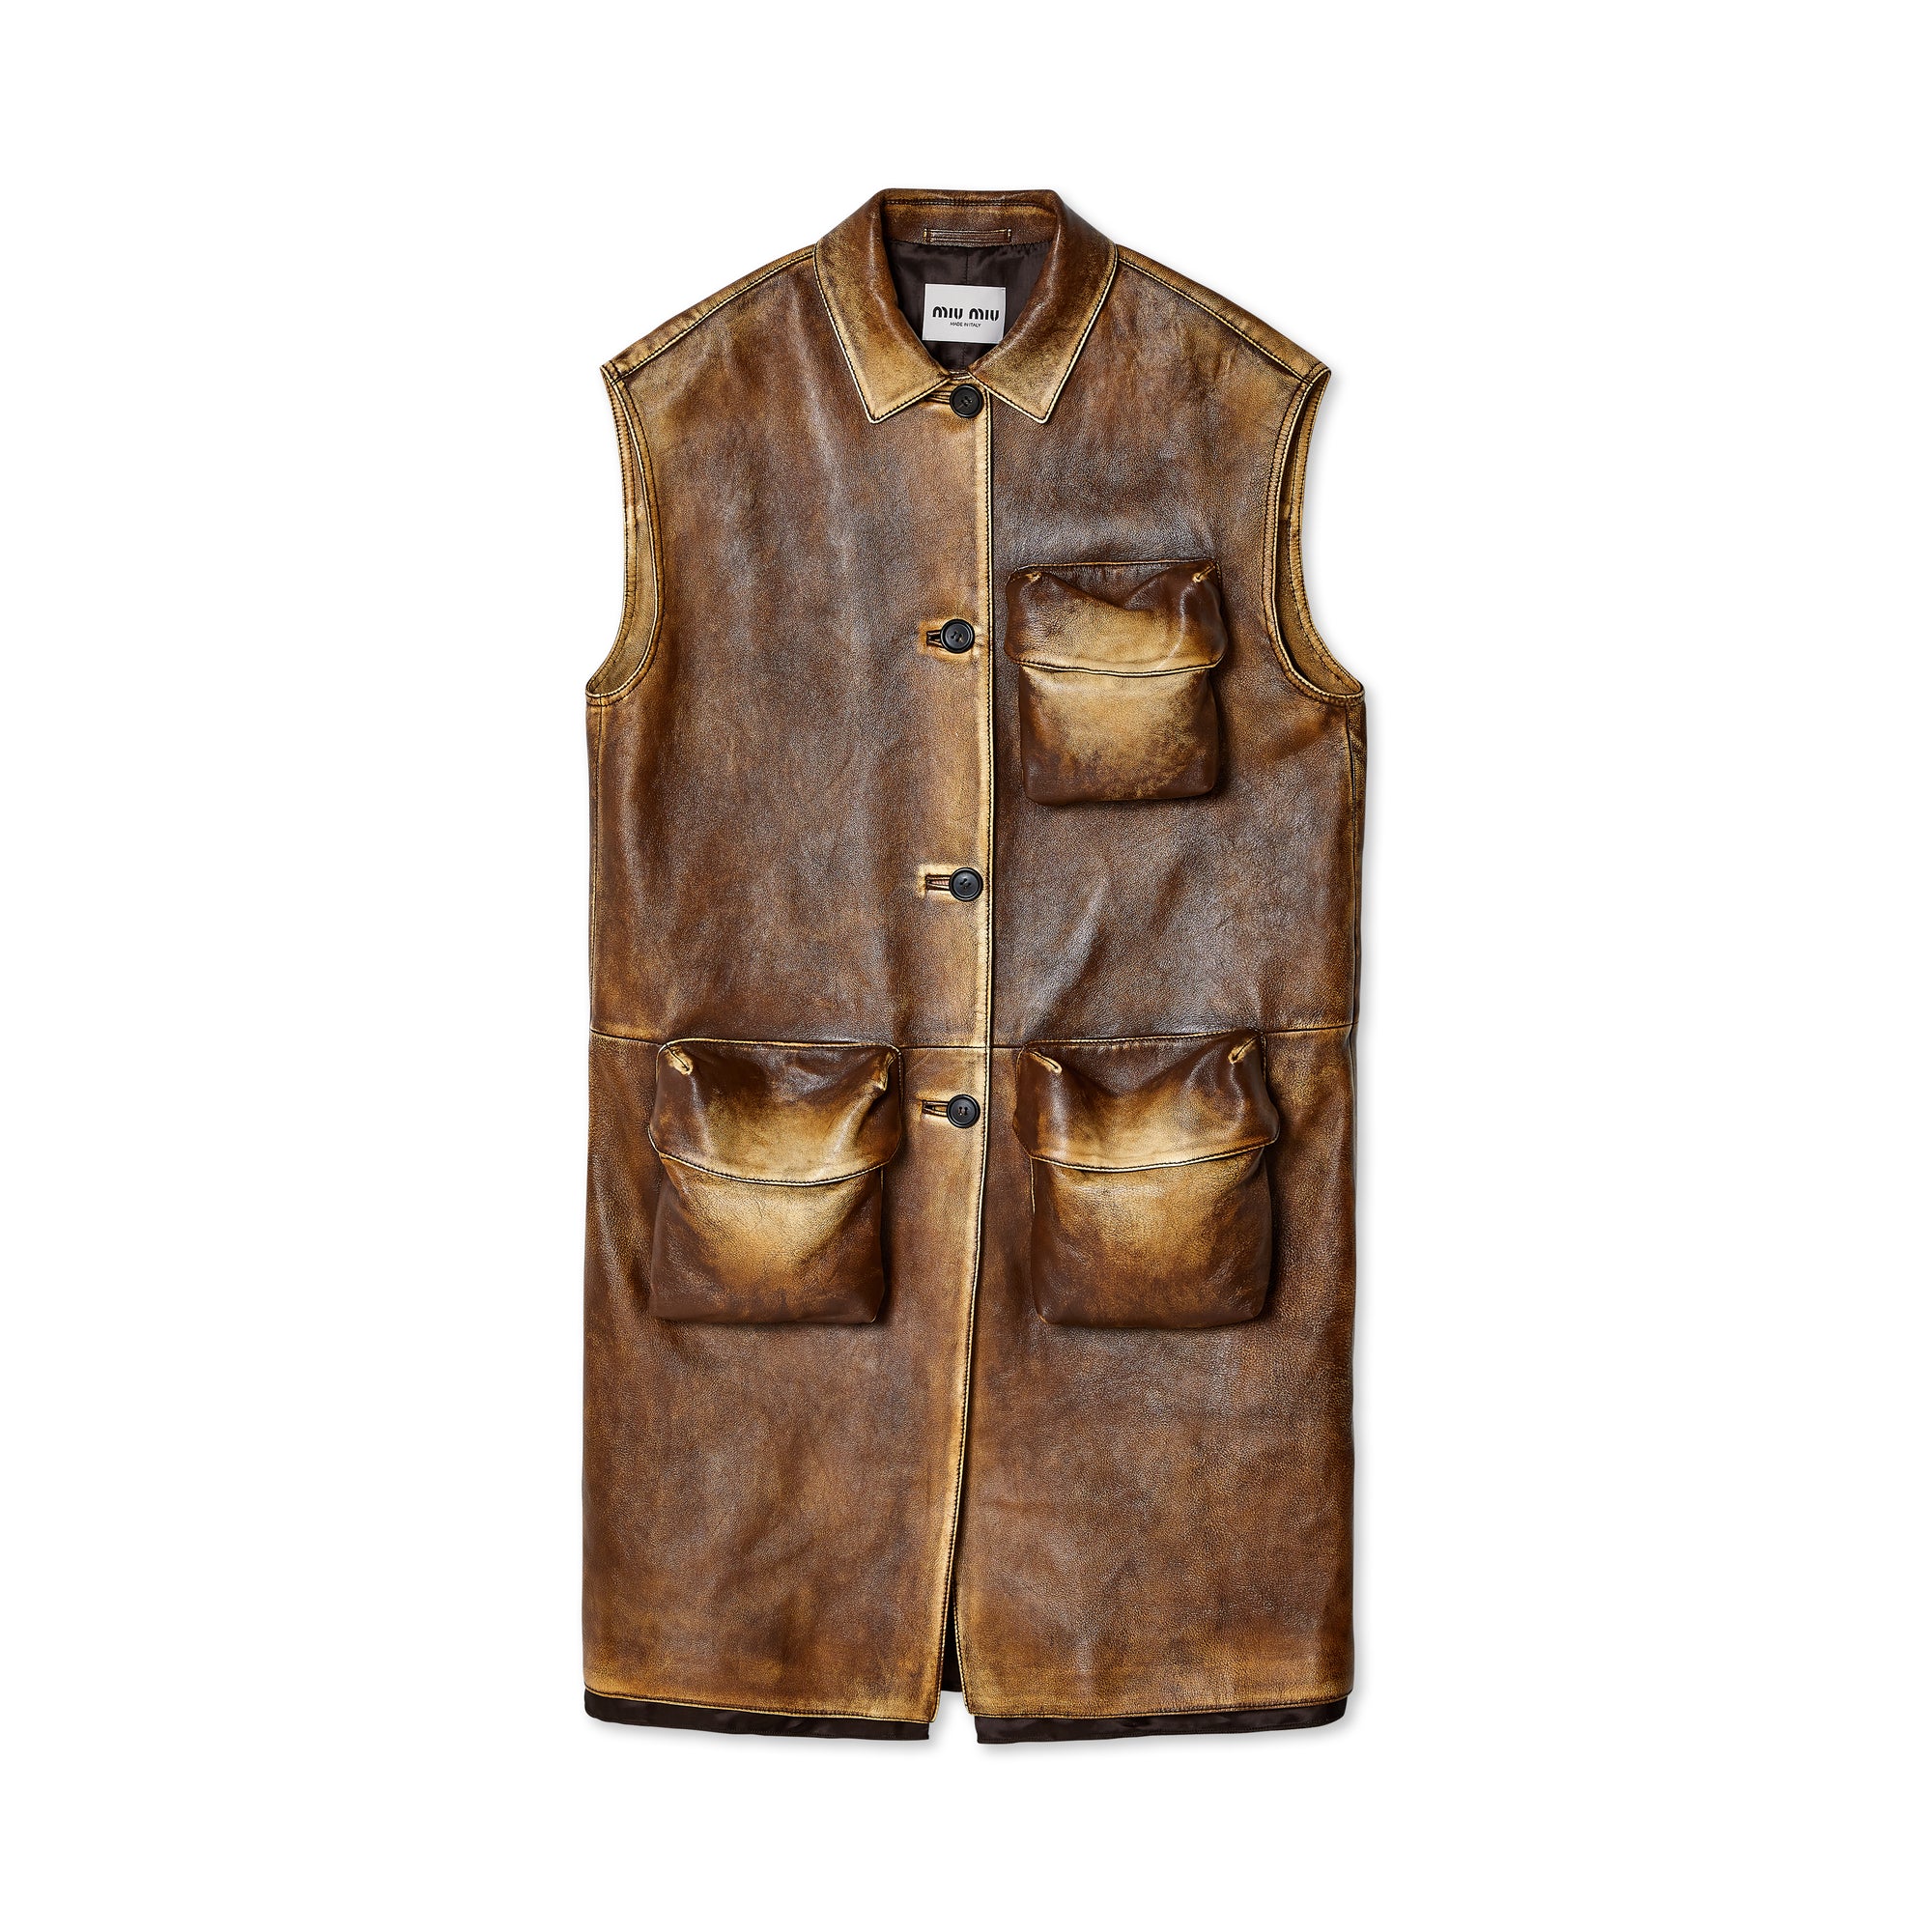 Miu Miu - Women's Nappa Leather Vest - (Ivory/Cocoa Brown) view 1